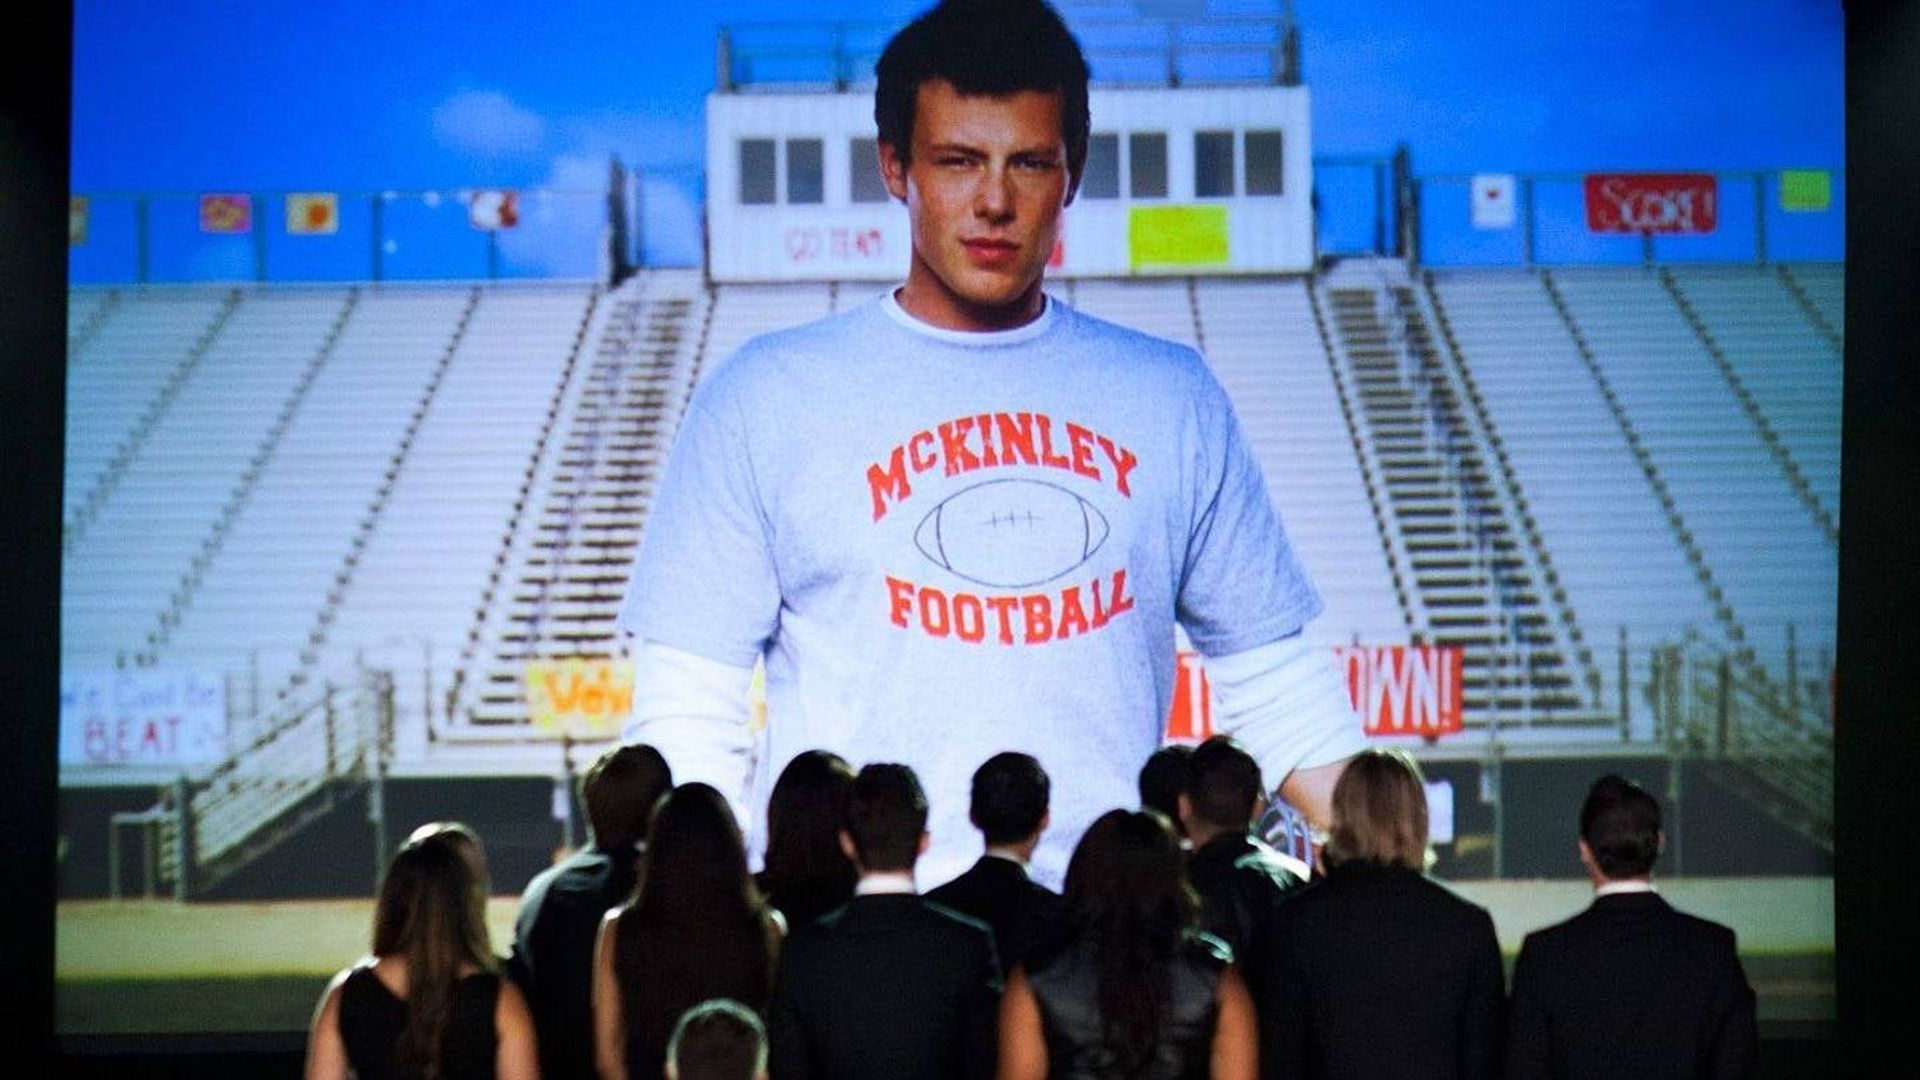 Glee background